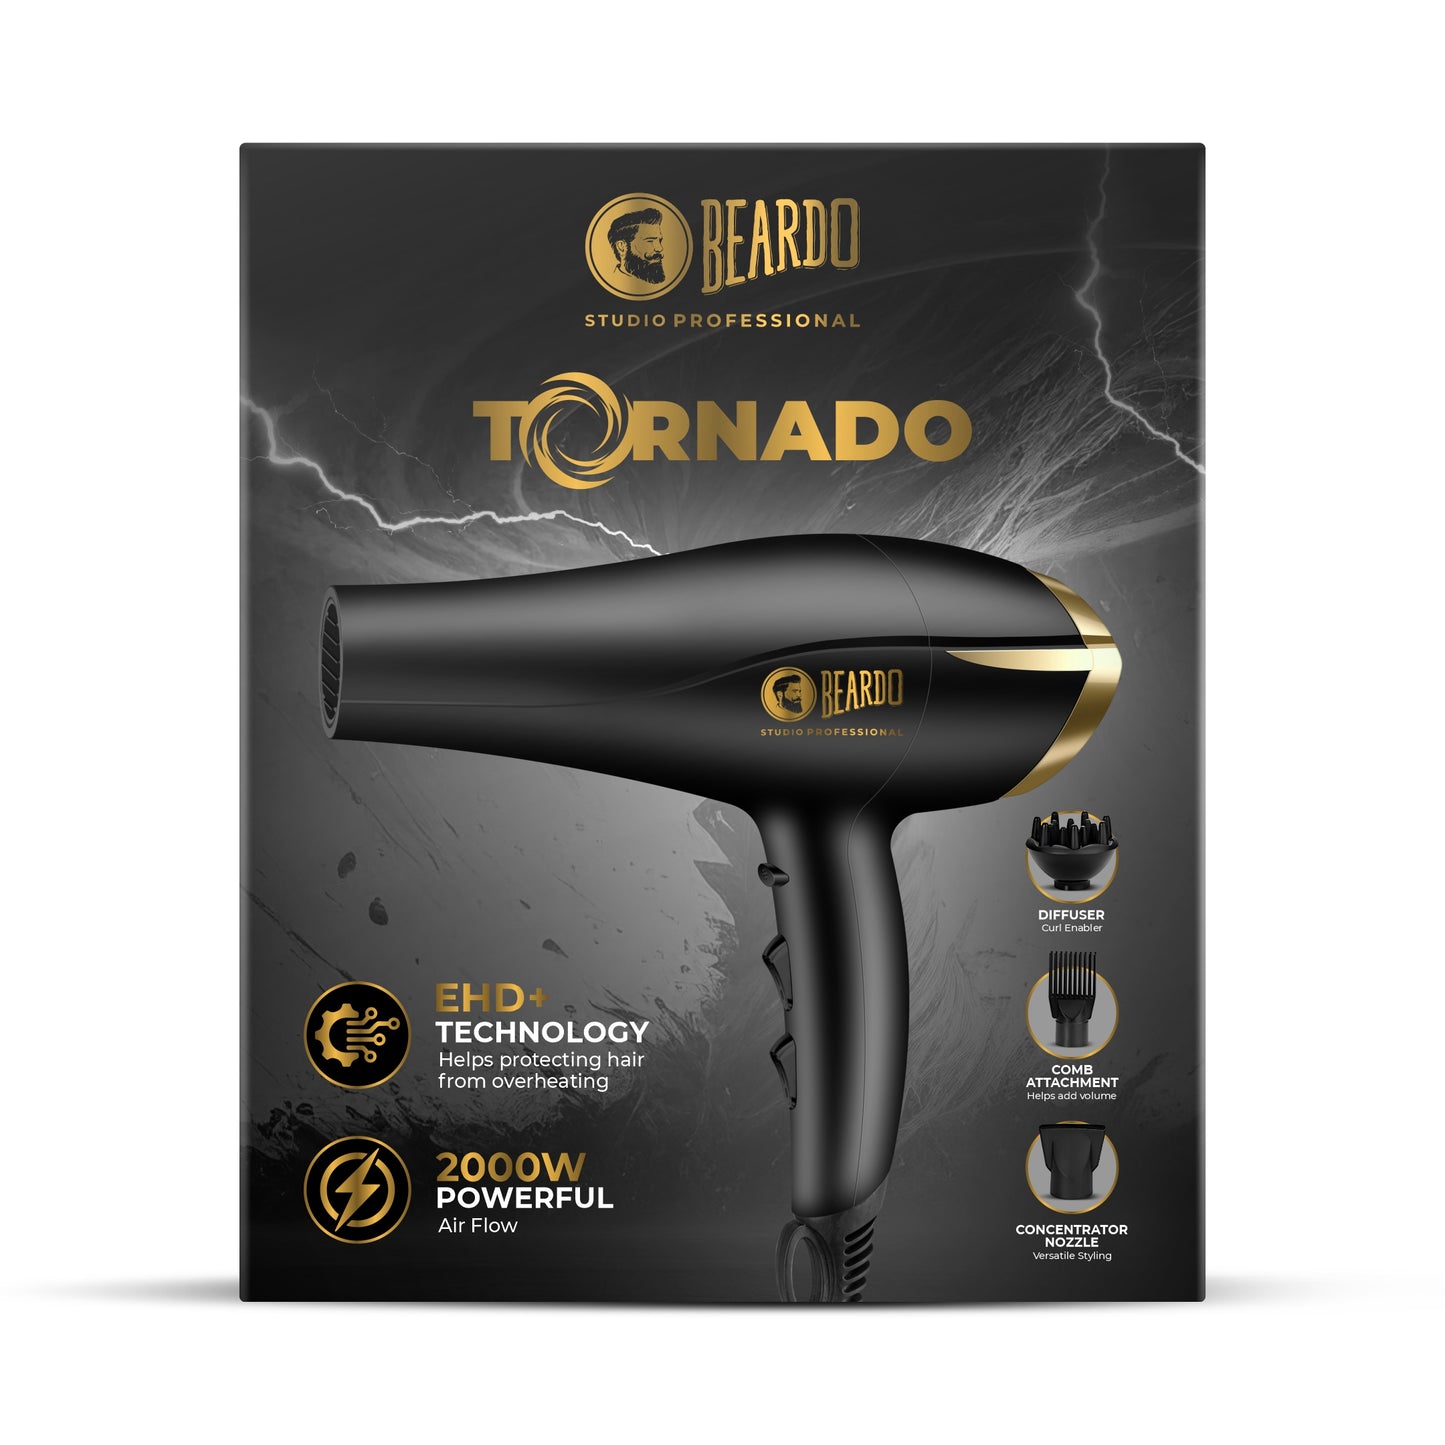 Beardo Studio Professional Tornado Hair Dryer